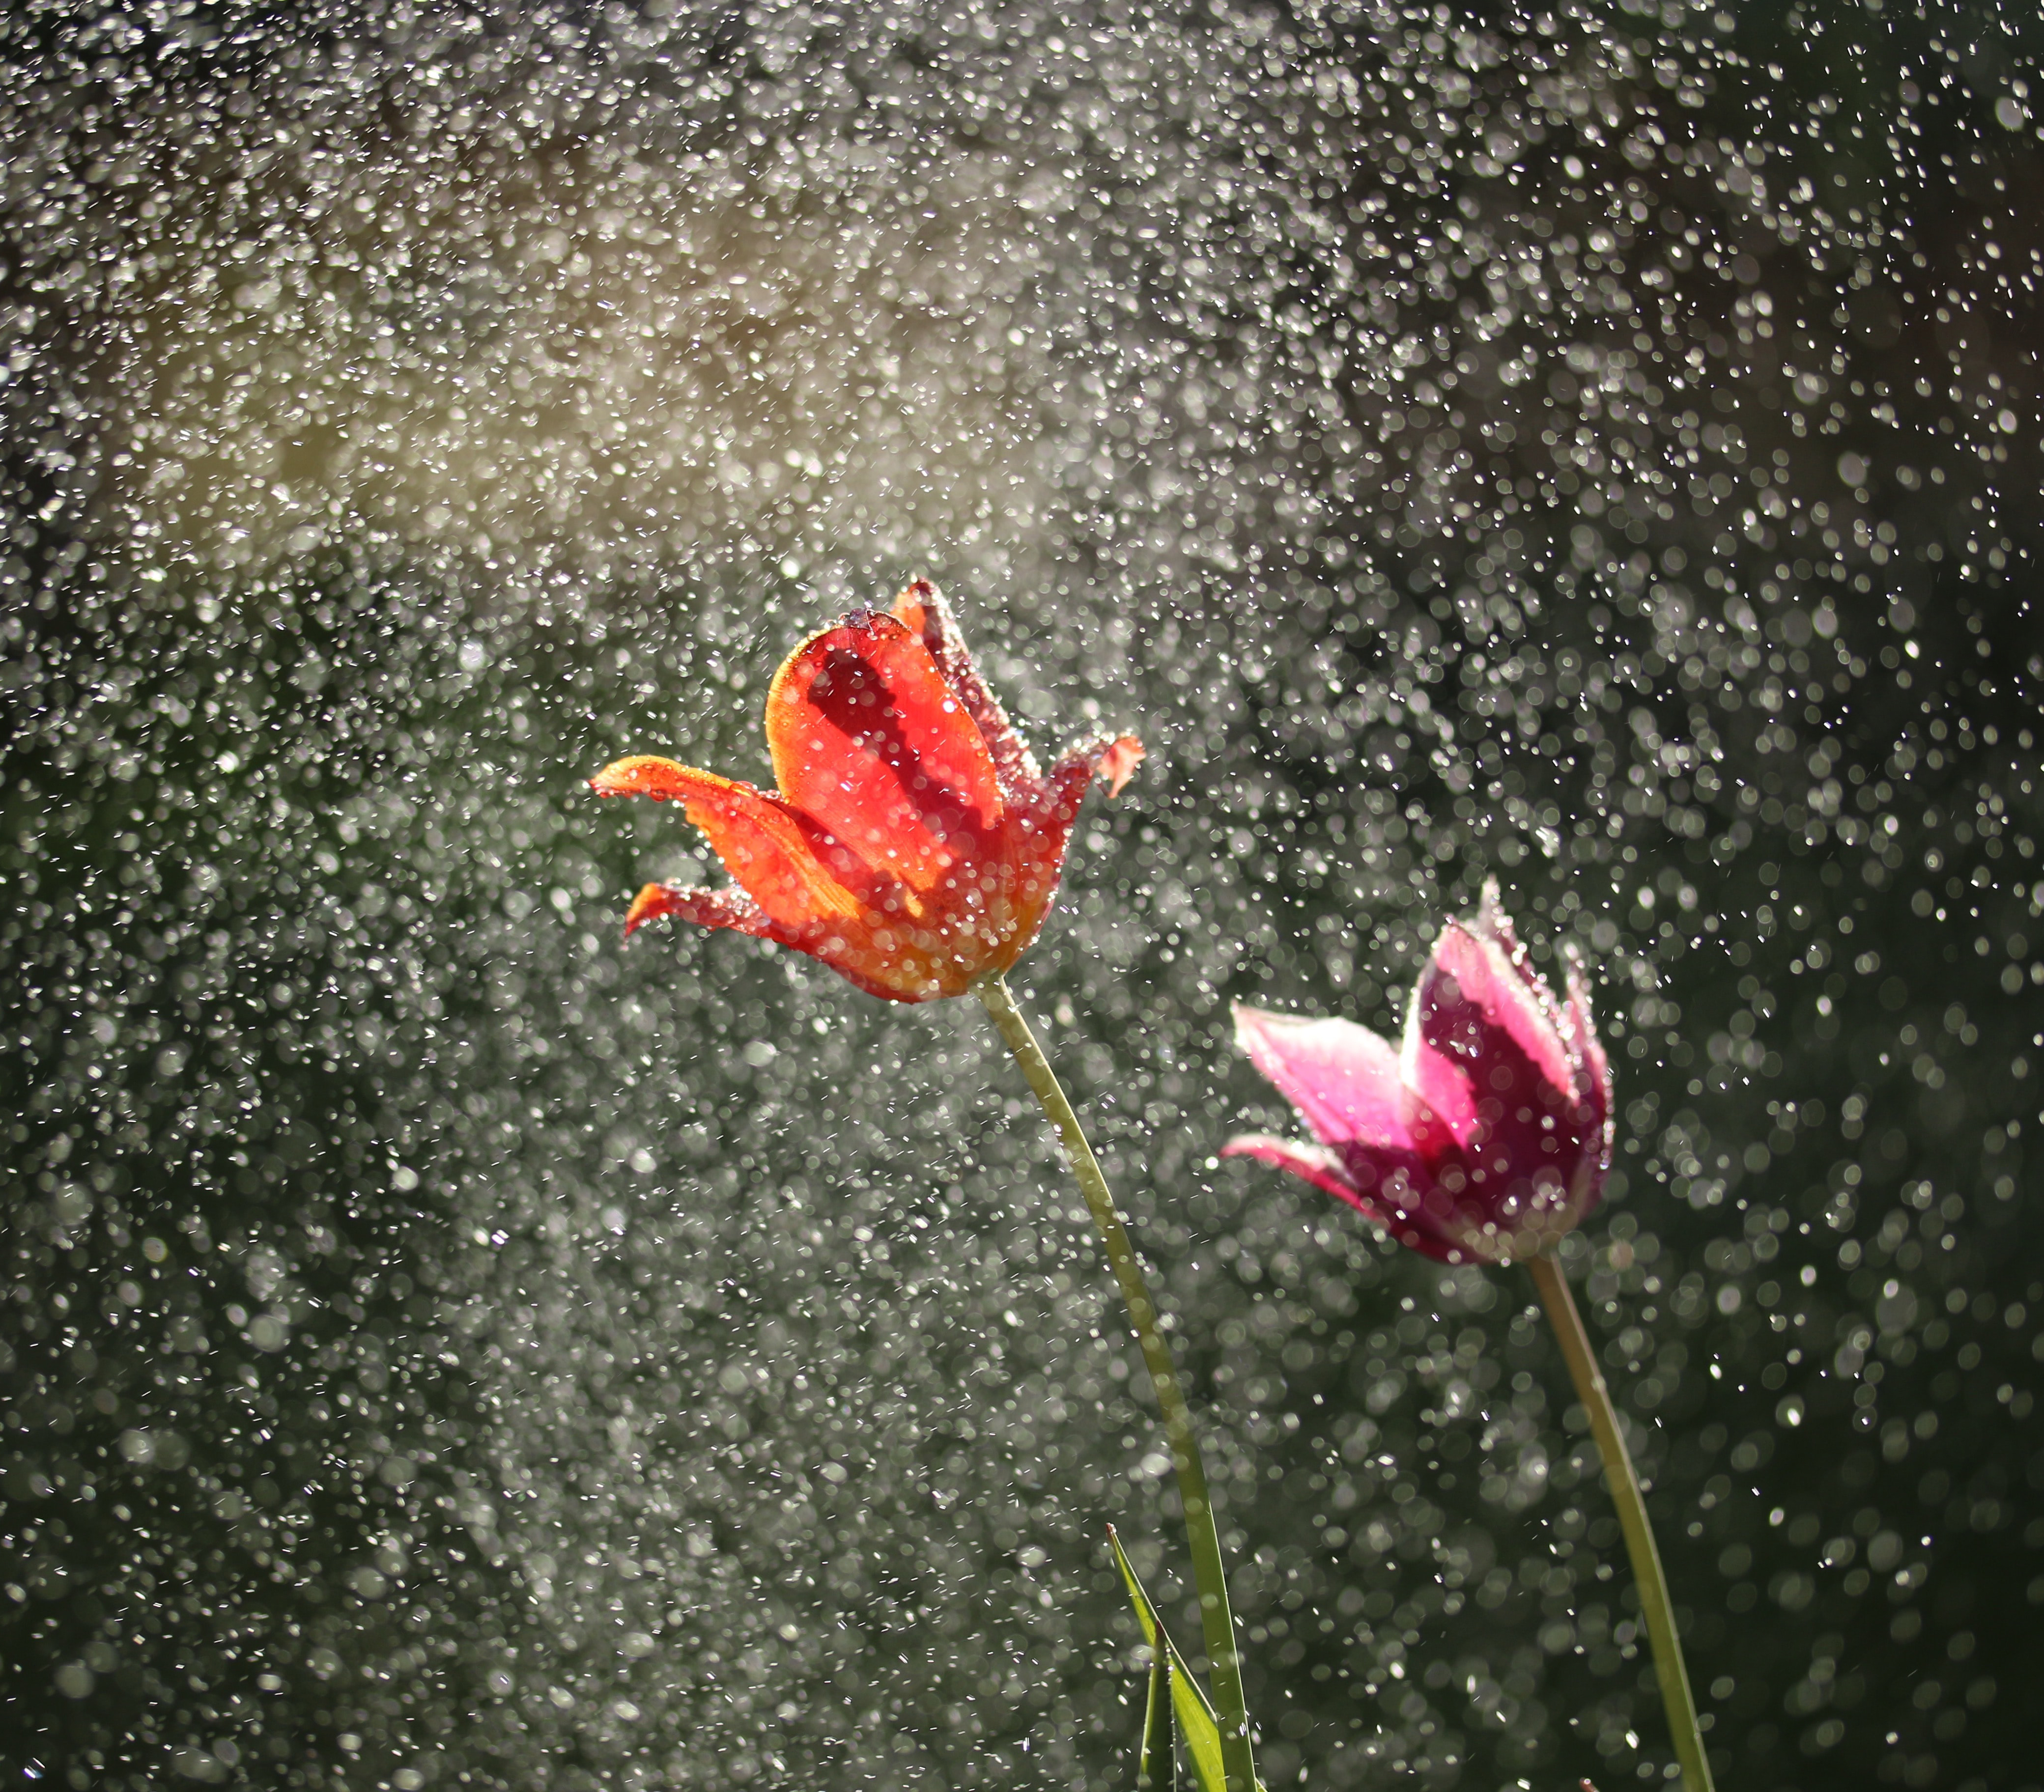 Flowers in the rain